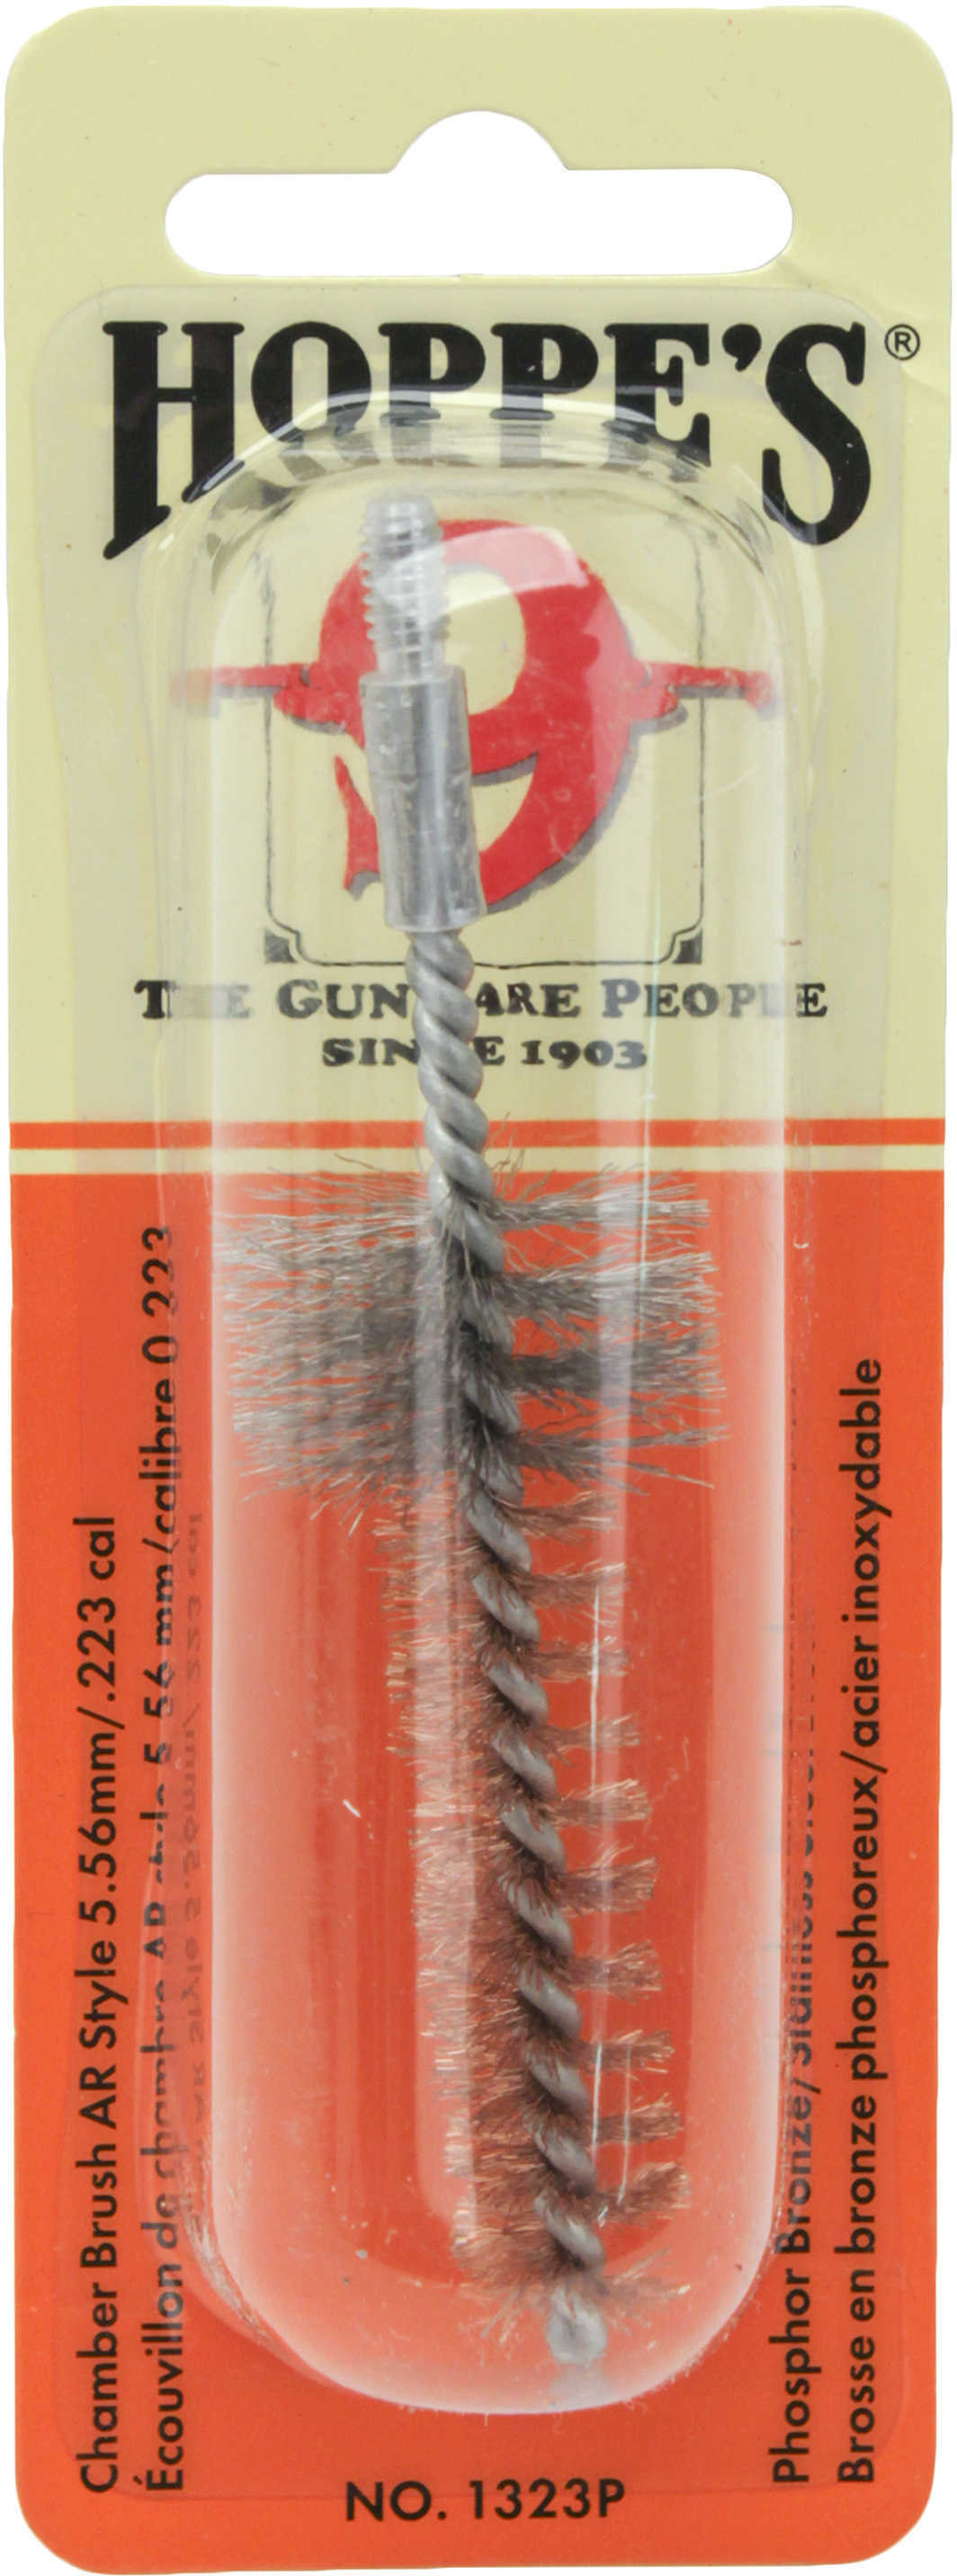 Hoppe's AR-15 Rifle Single Chamber Brush 5.56mm NATO/.223 Remington, Blister Card 1323P